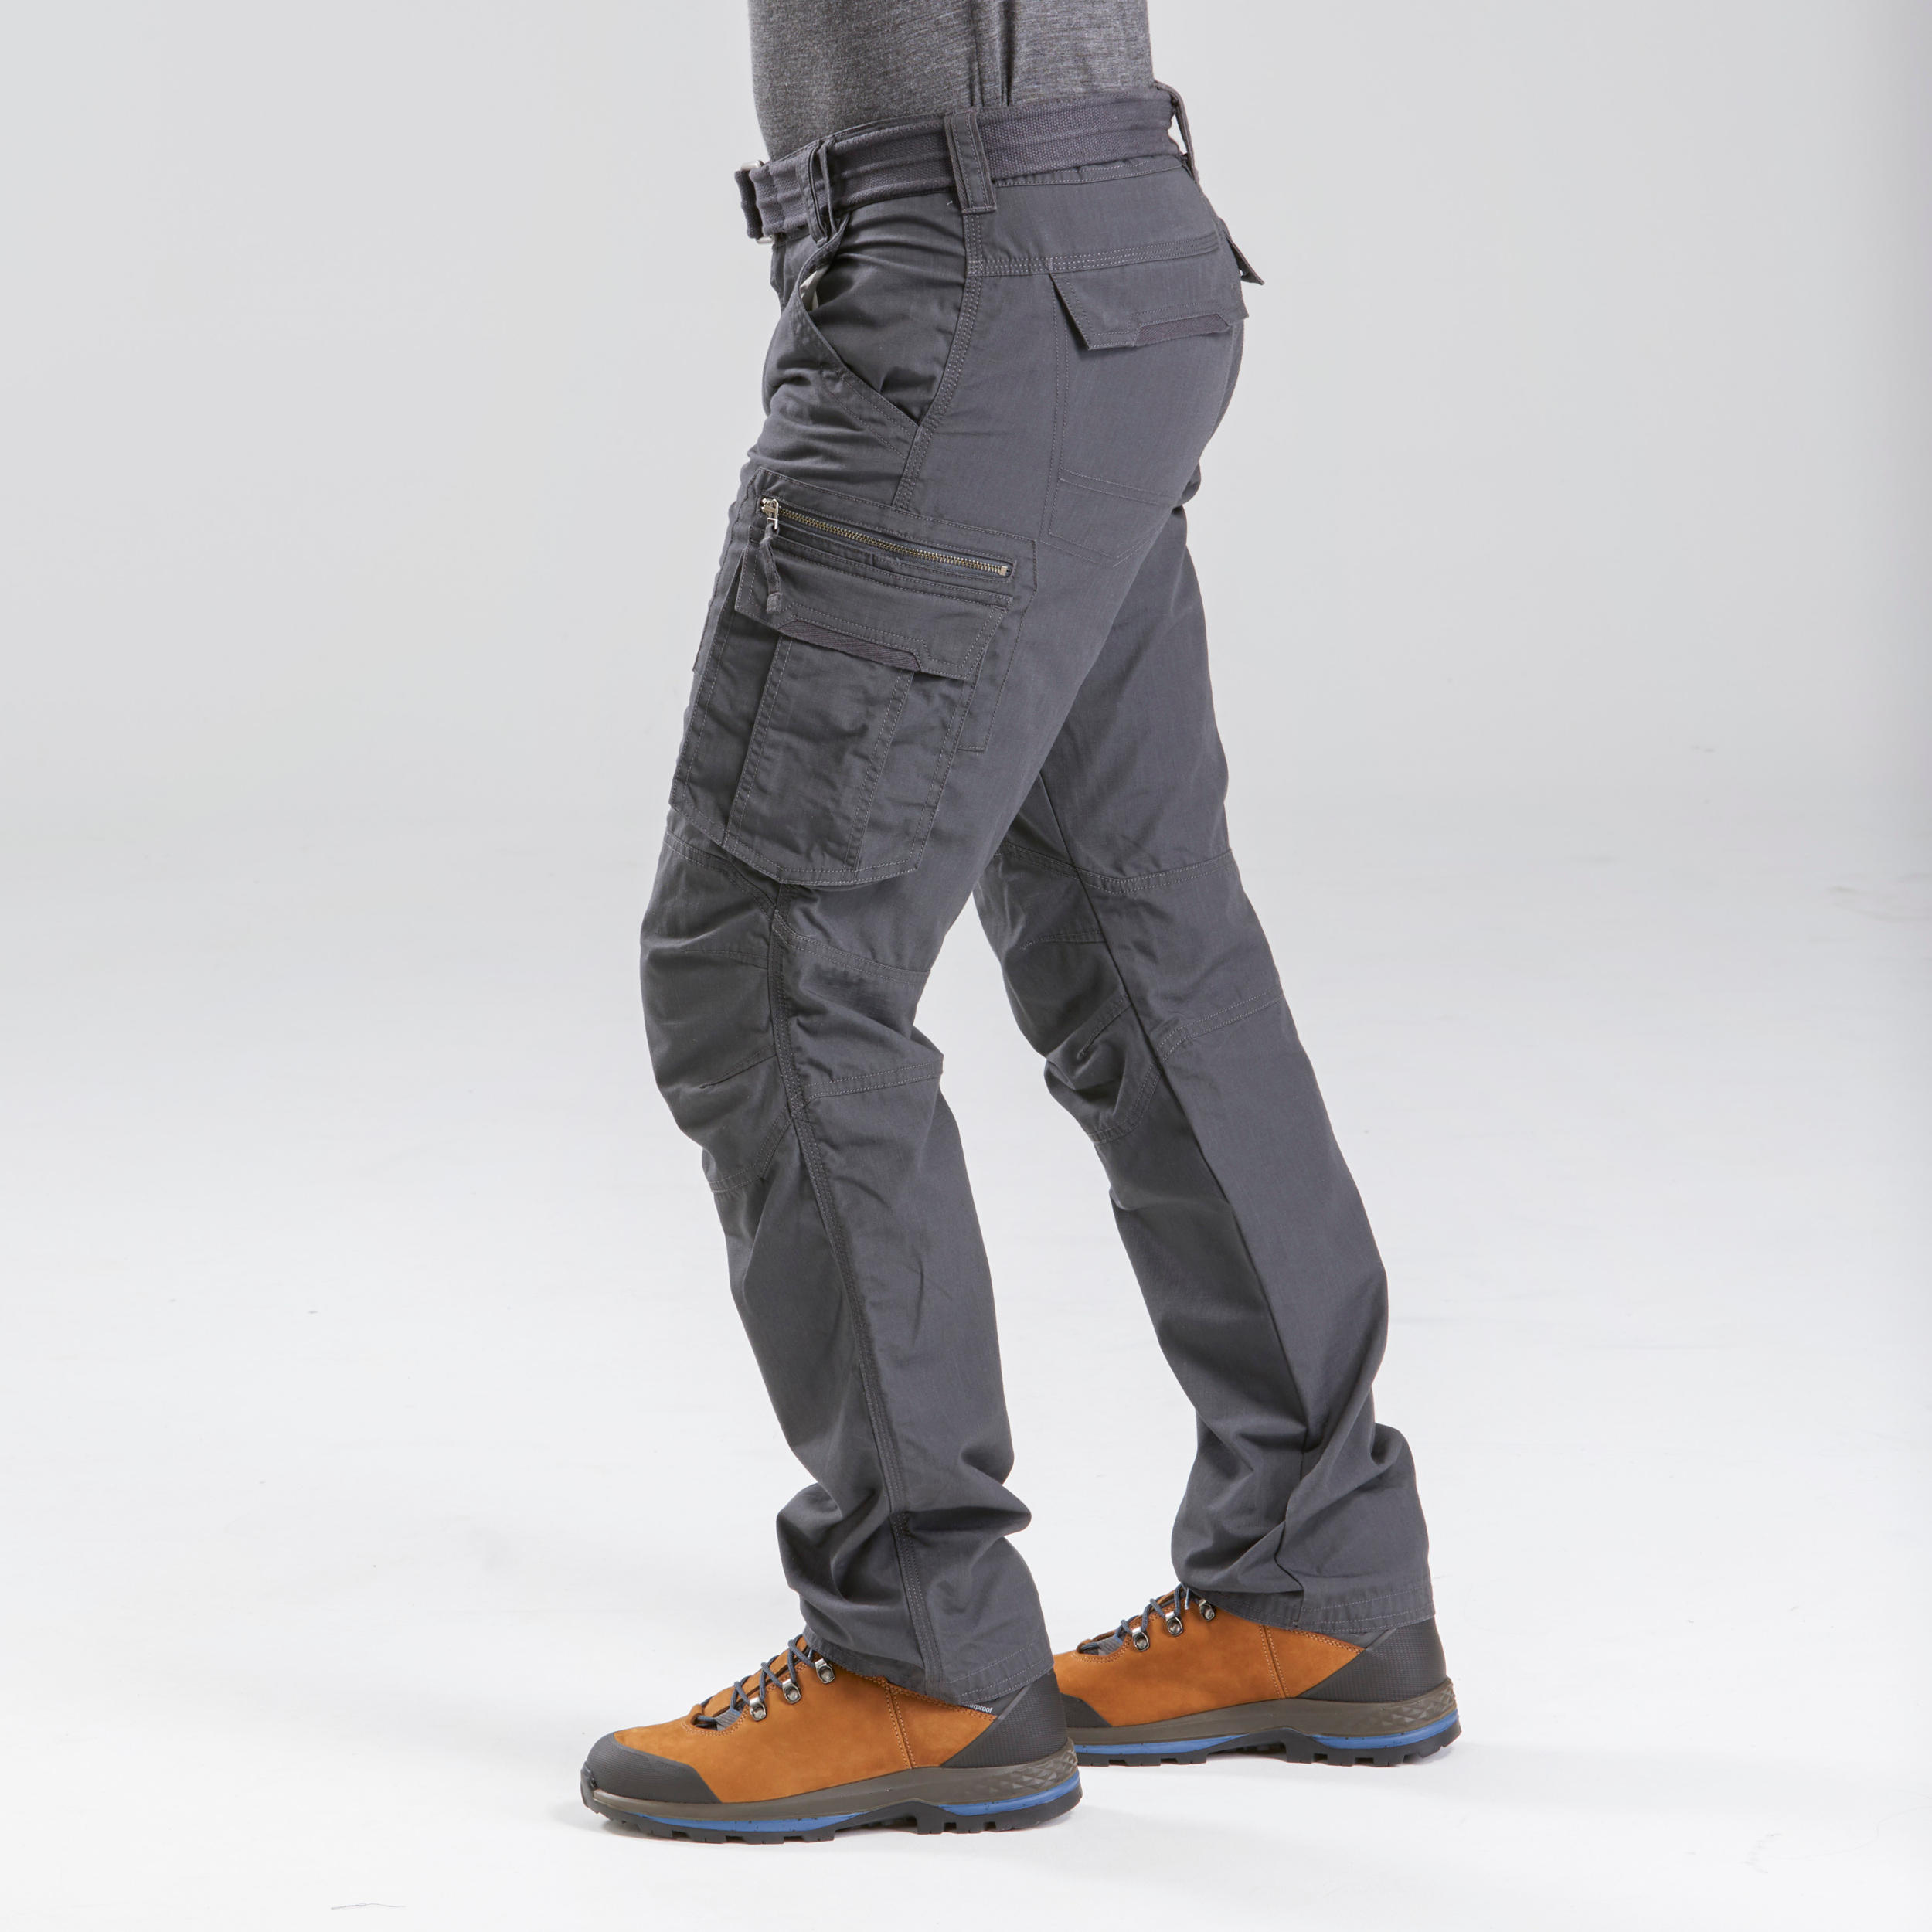 Men’s Breathable Warm Pants - SH 500 Grey